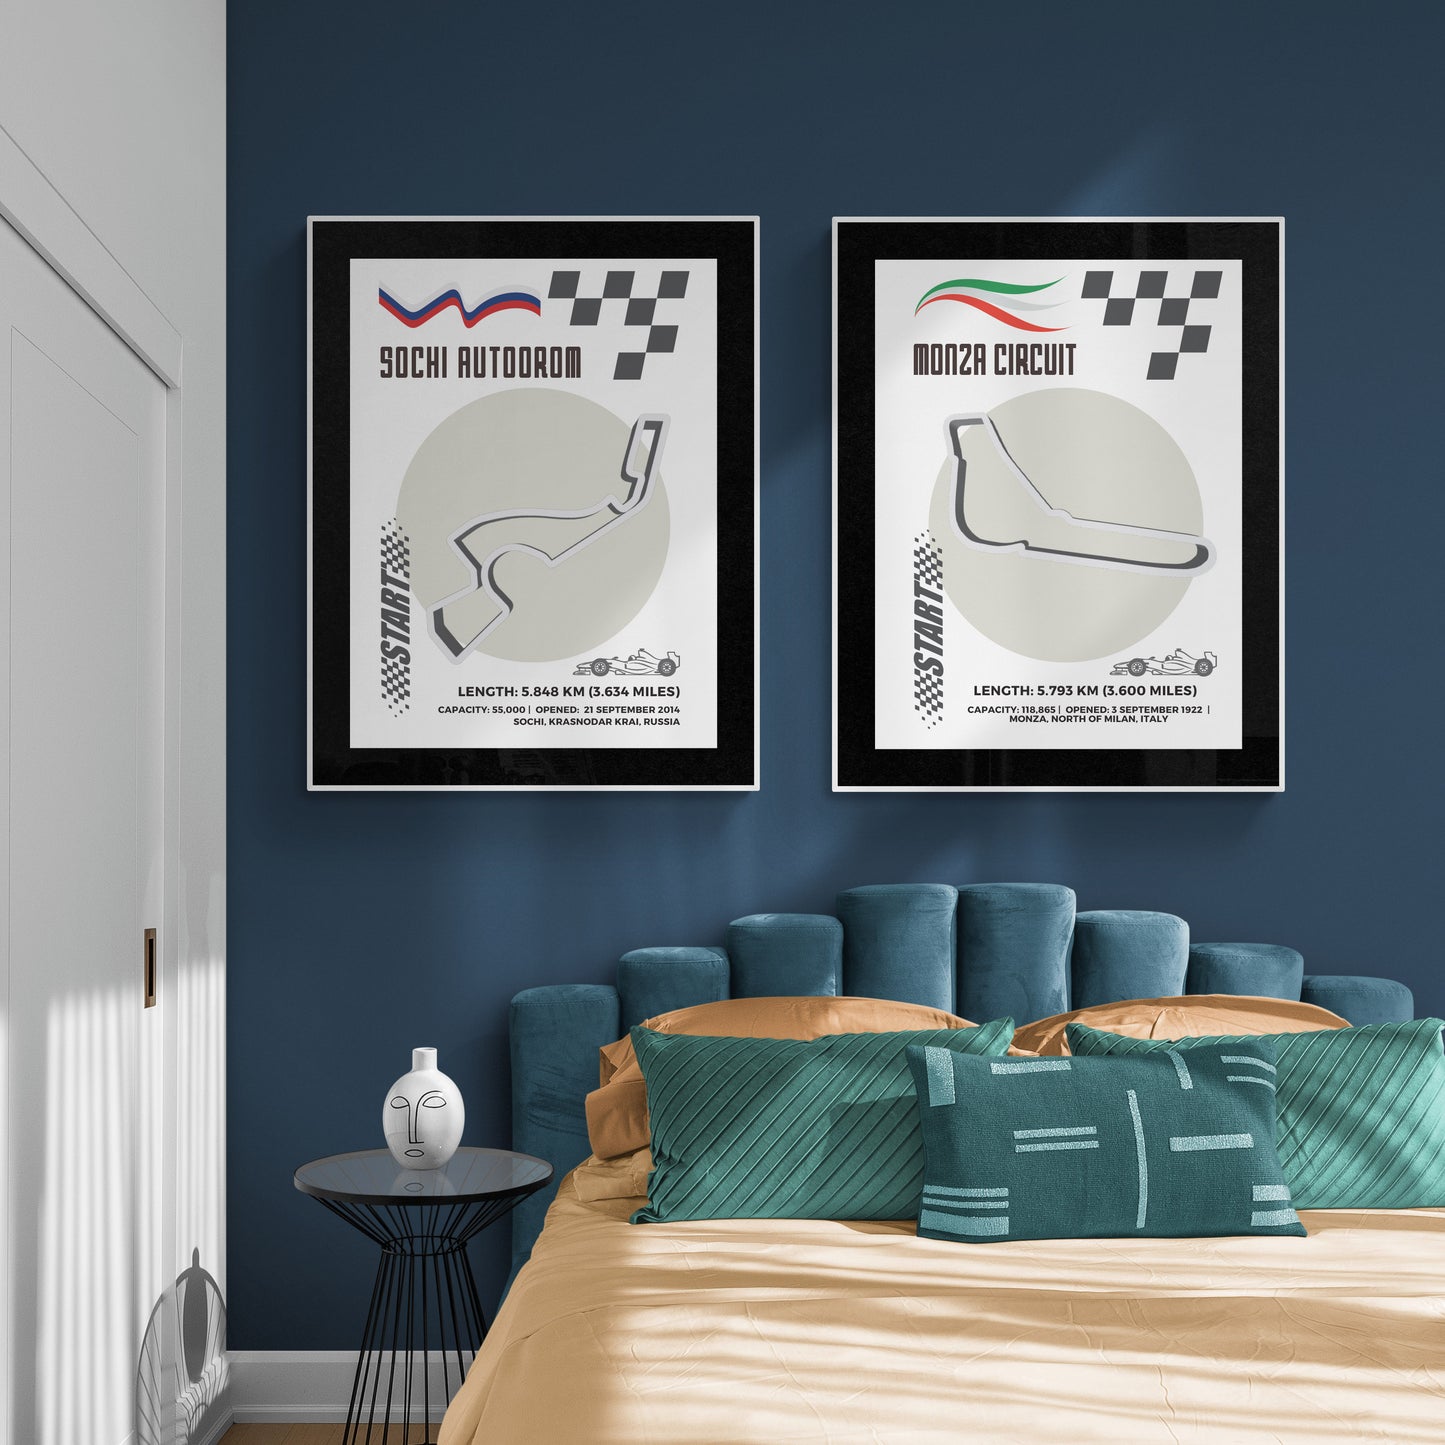 Shanghai Circuit F1 posters